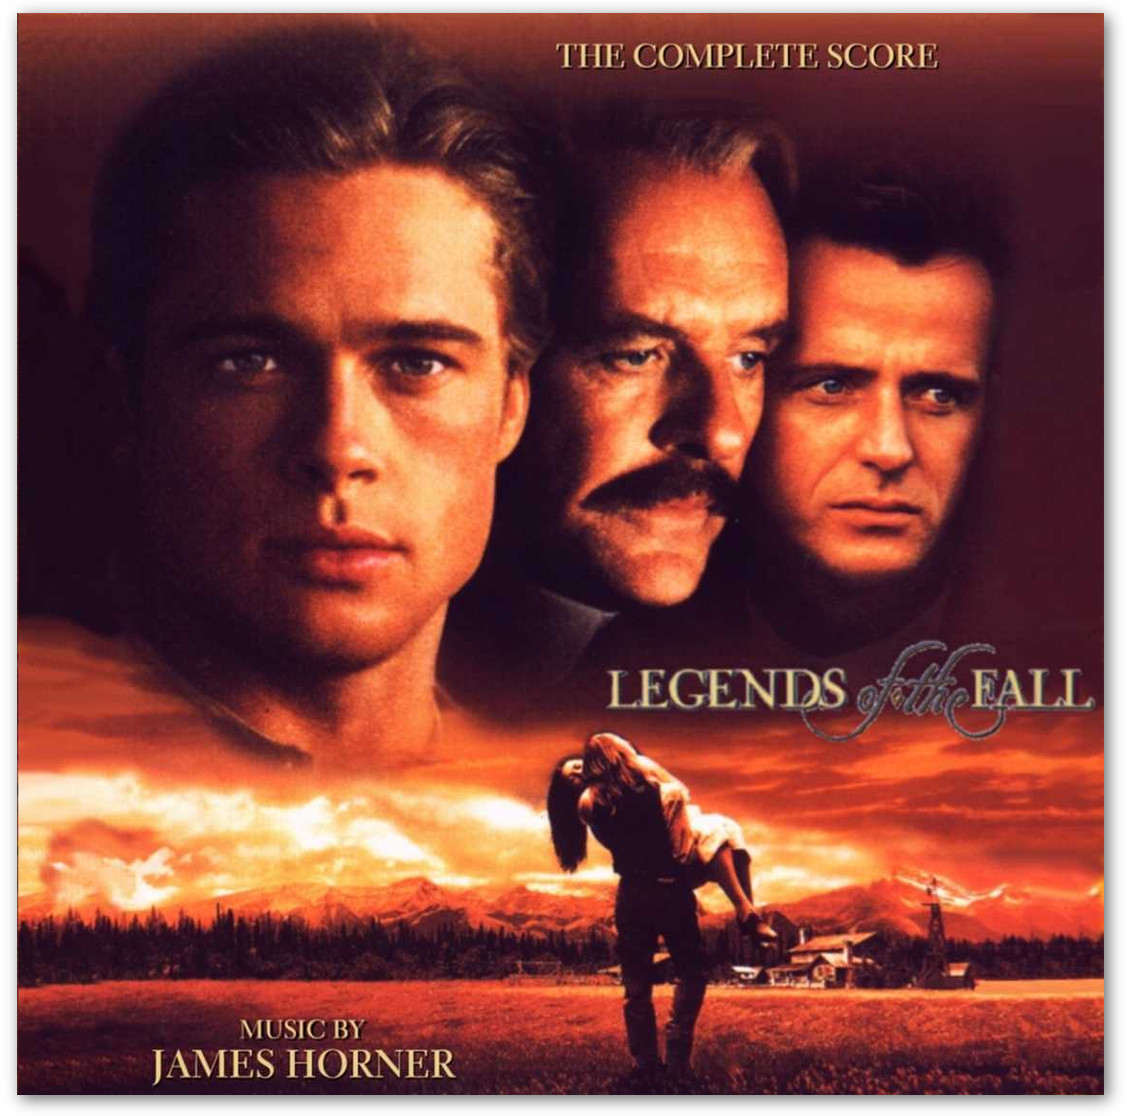 Legends of the fall - James Horner